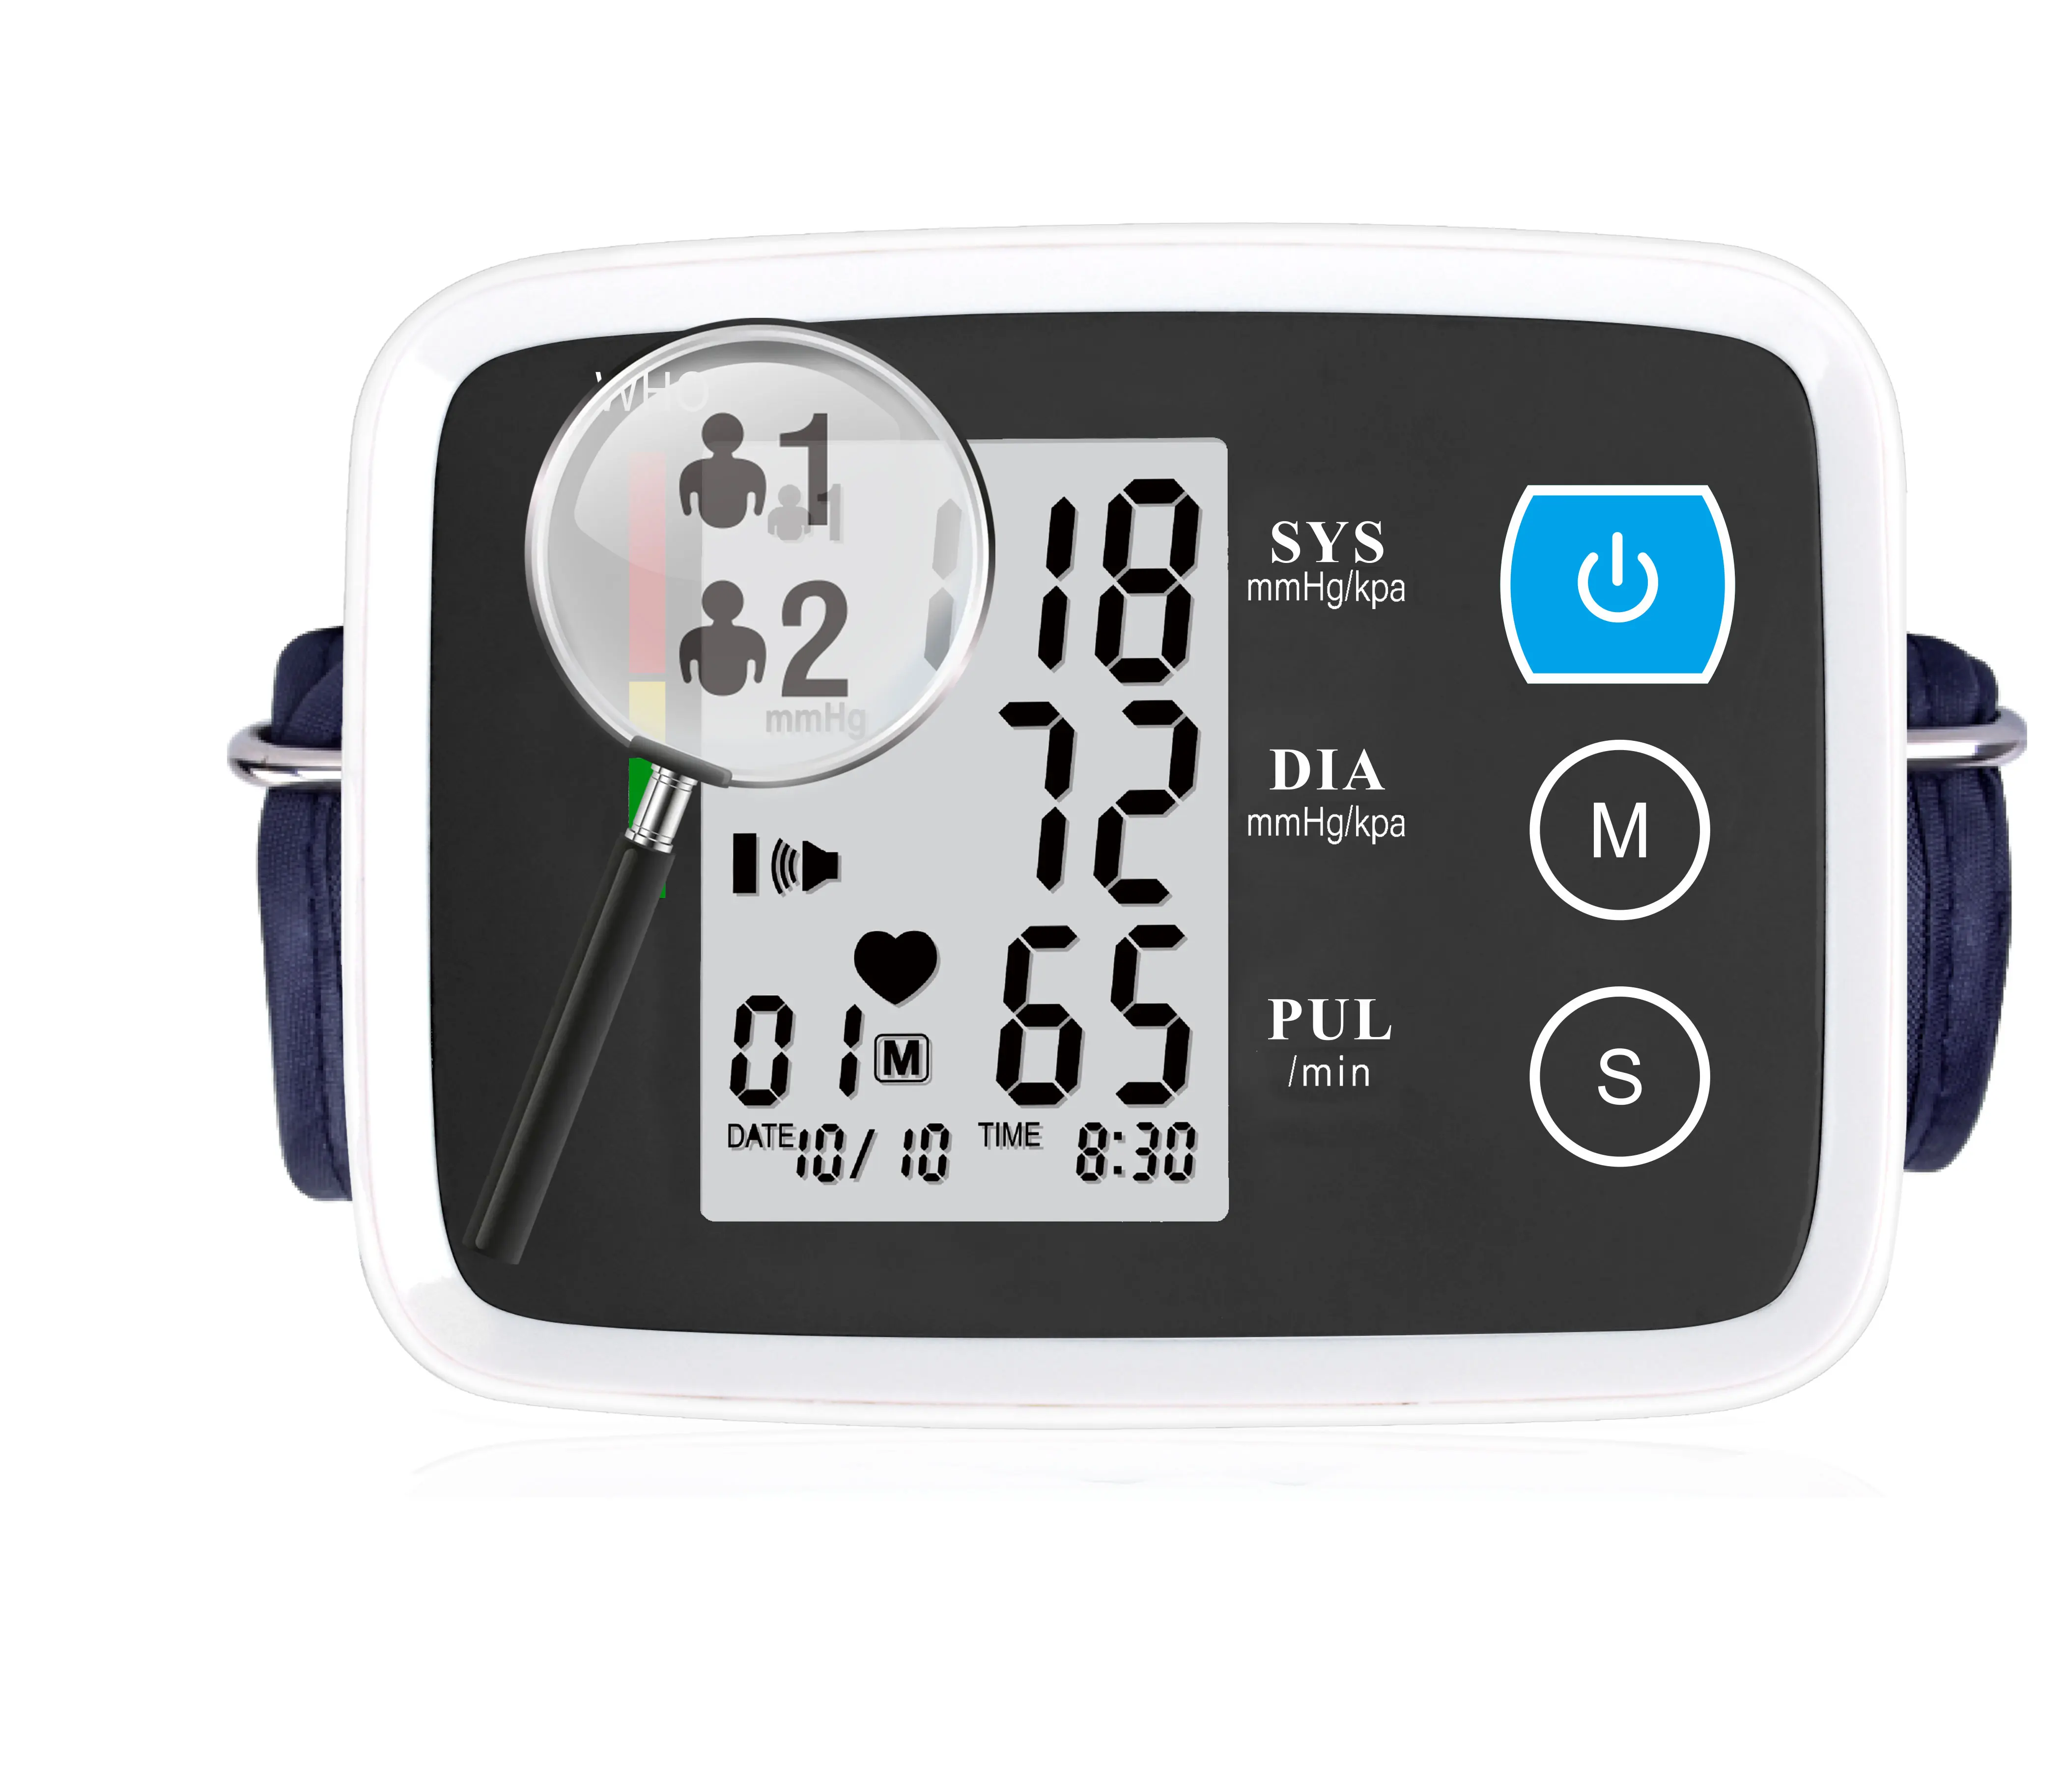 CK-A155 Smart Sphygmomanometer Blood Pressure Apparatus For Sale Blood Pressure Monitor Upper Arm Type Digital BP